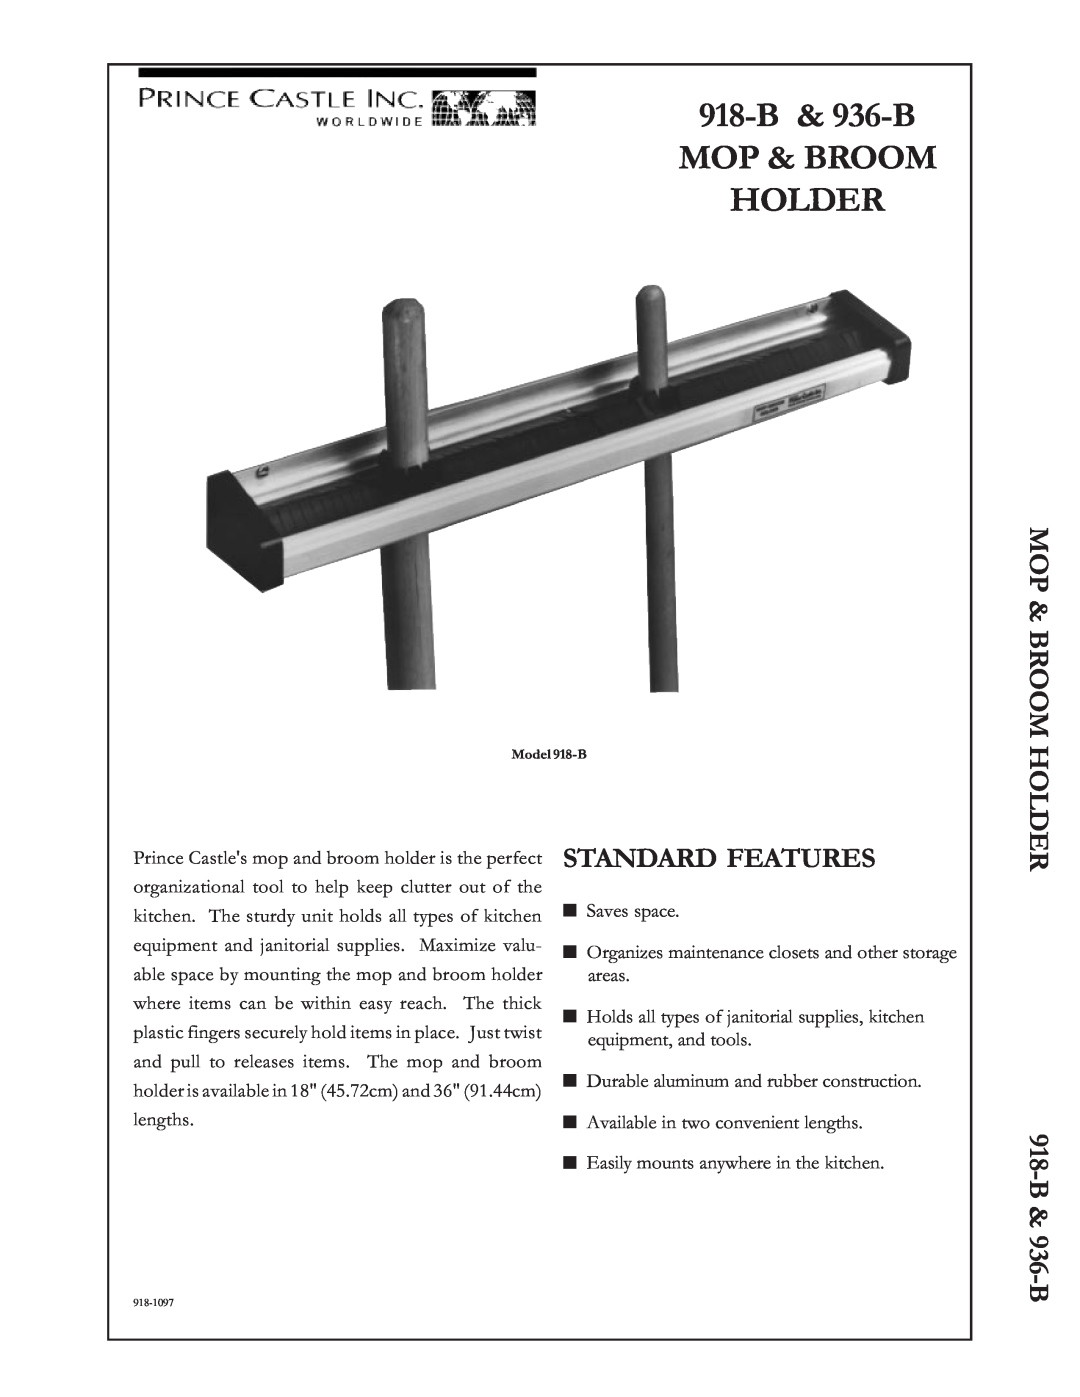 Prince Castle manual 918-B& 936-B MOP & BROOM HOLDER, Standard Features, Mop & Broom Holder 